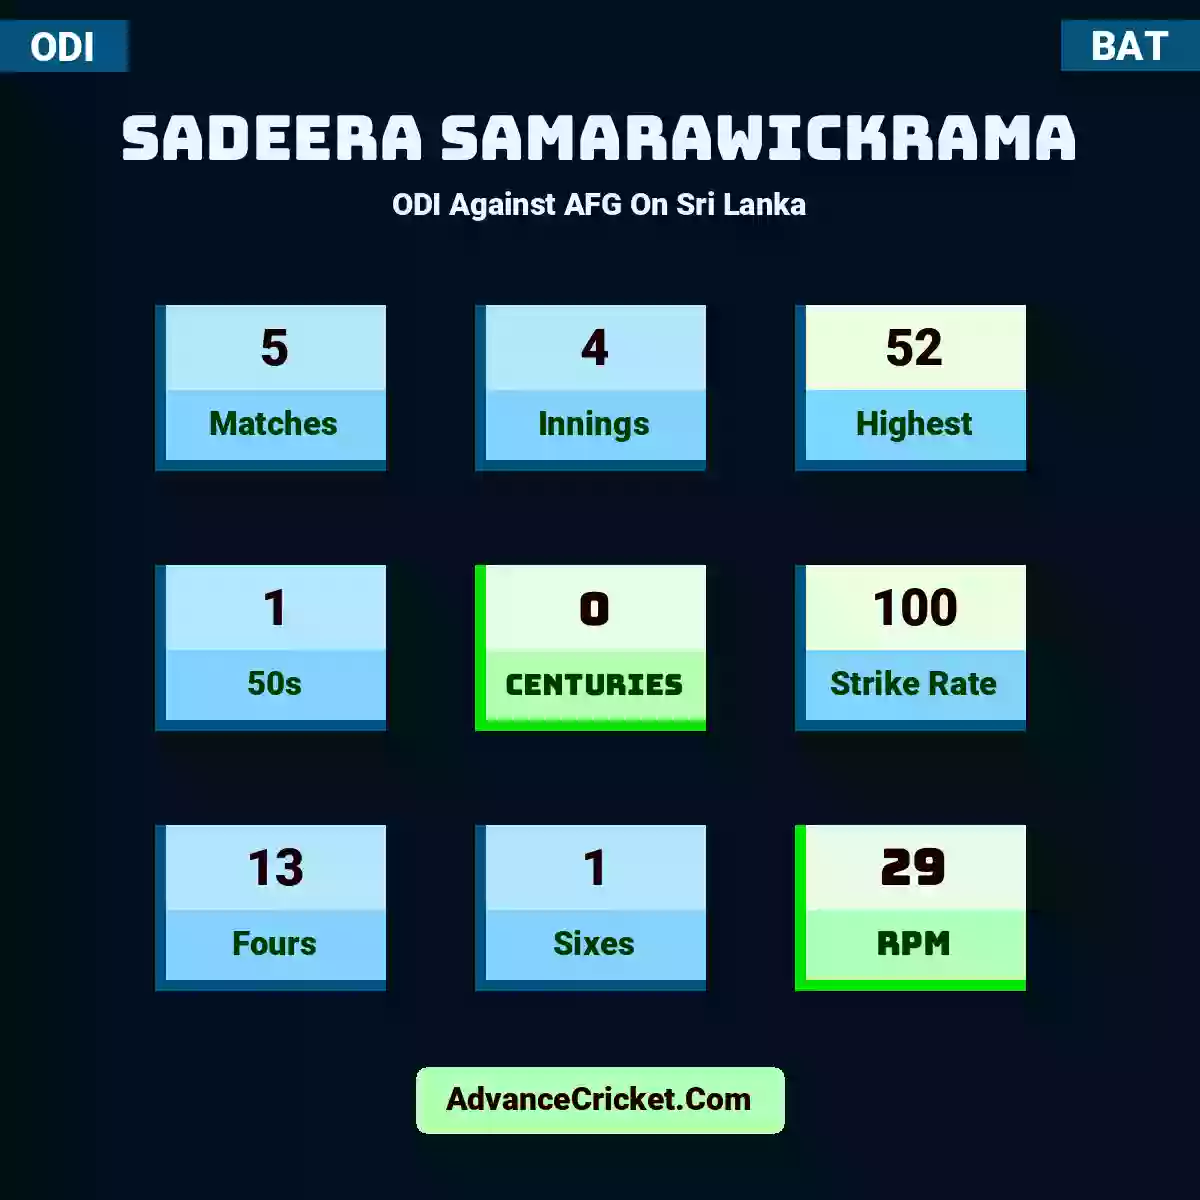 Sadeera Samarawickrama ODI  Against AFG On Sri Lanka, Sadeera Samarawickrama played 5 matches, scored 52 runs as highest, 1 half-centuries, and 0 centuries, with a strike rate of 100. S.Samarawickrama hit 13 fours and 1 sixes, with an RPM of 29.